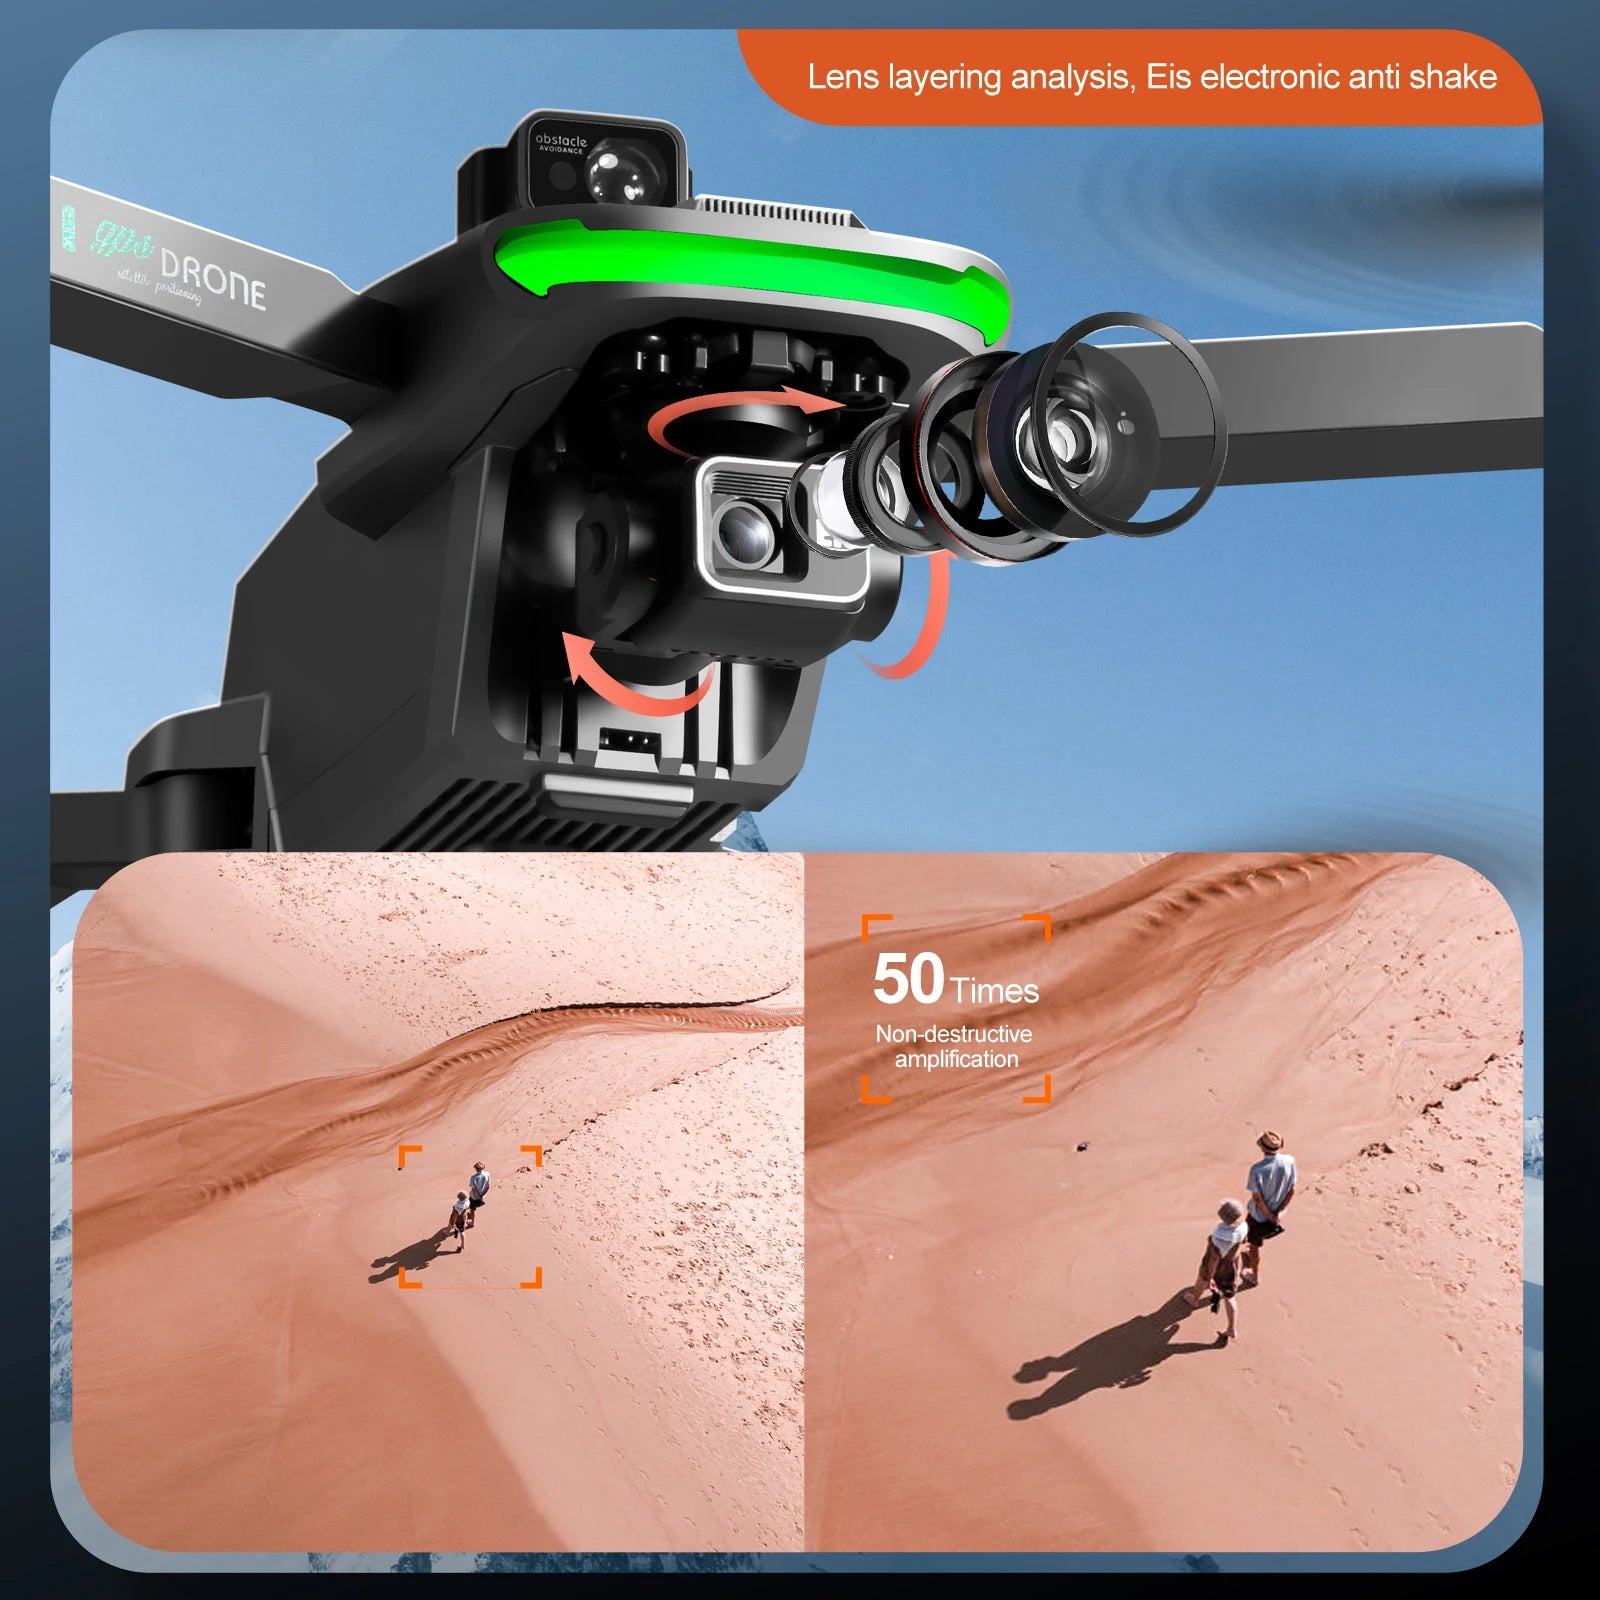 S155 Pro GPS Drone, Eis electronic anti-shake obslacle Aroidango @ 50Times Non-destruct